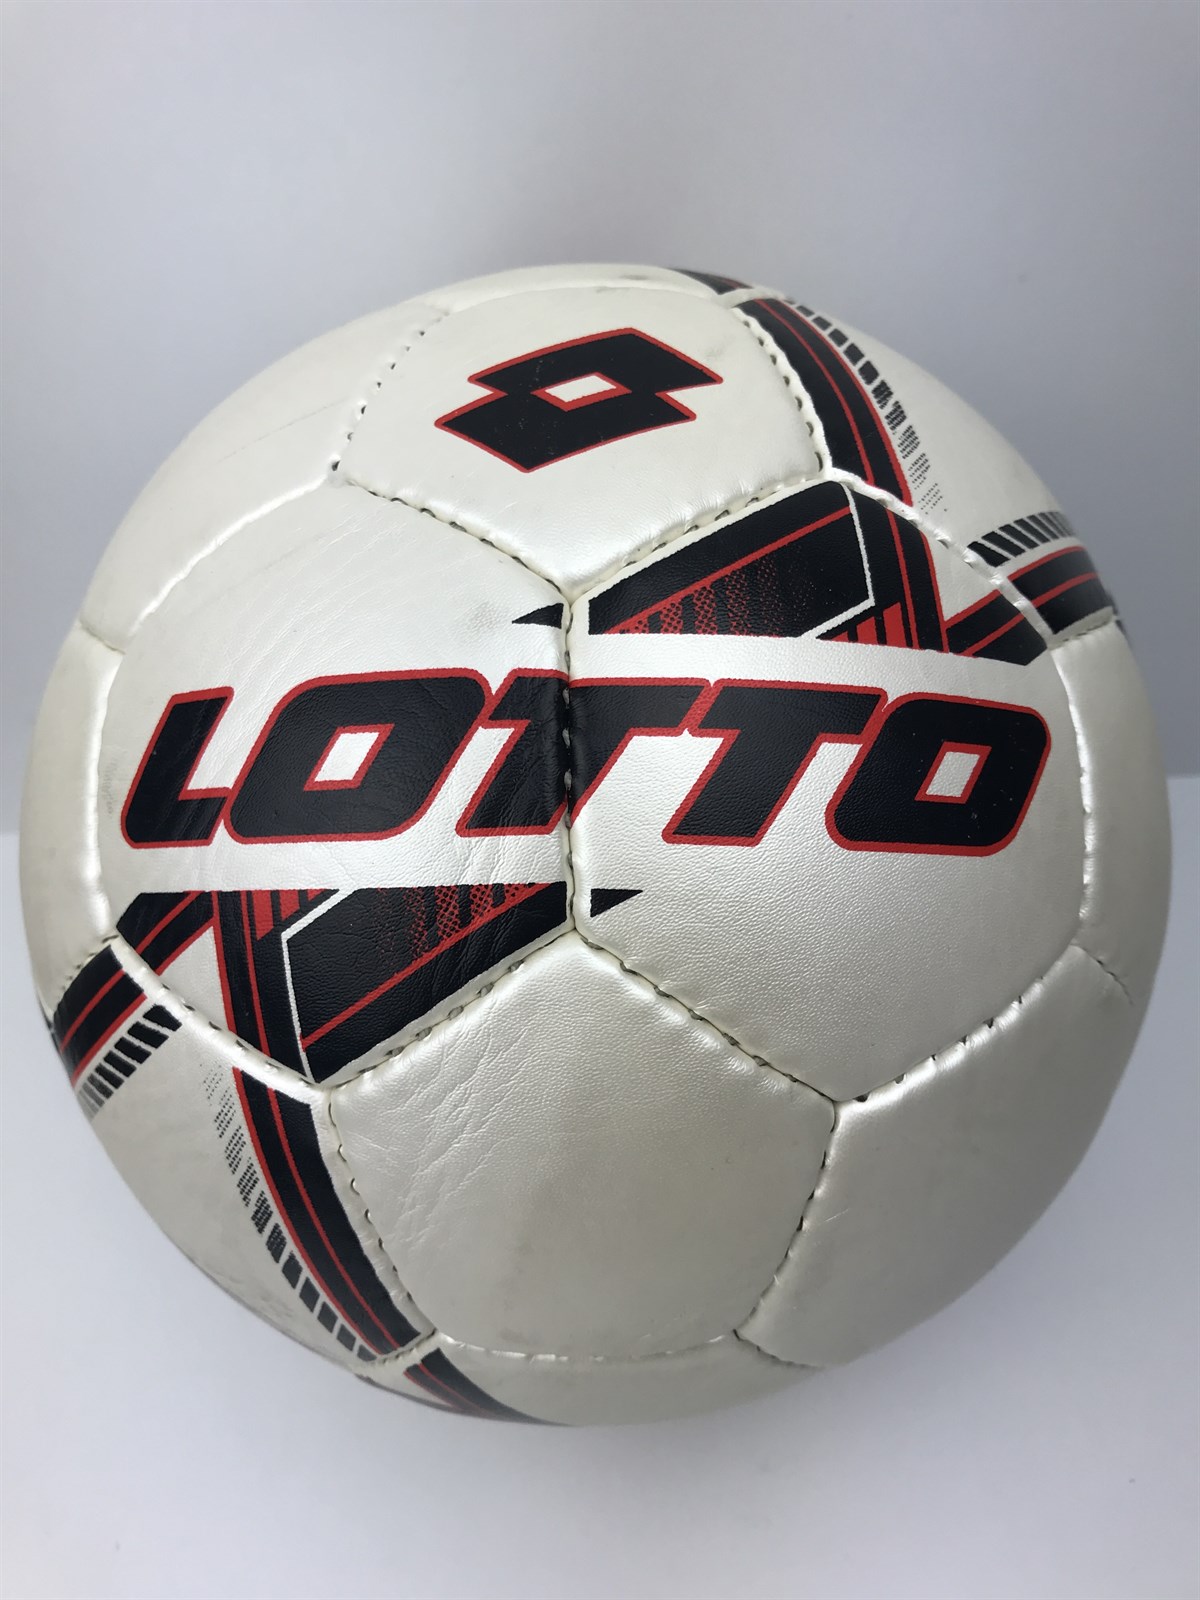 room Manga Carry Lotto Dikişli Futbol Topu